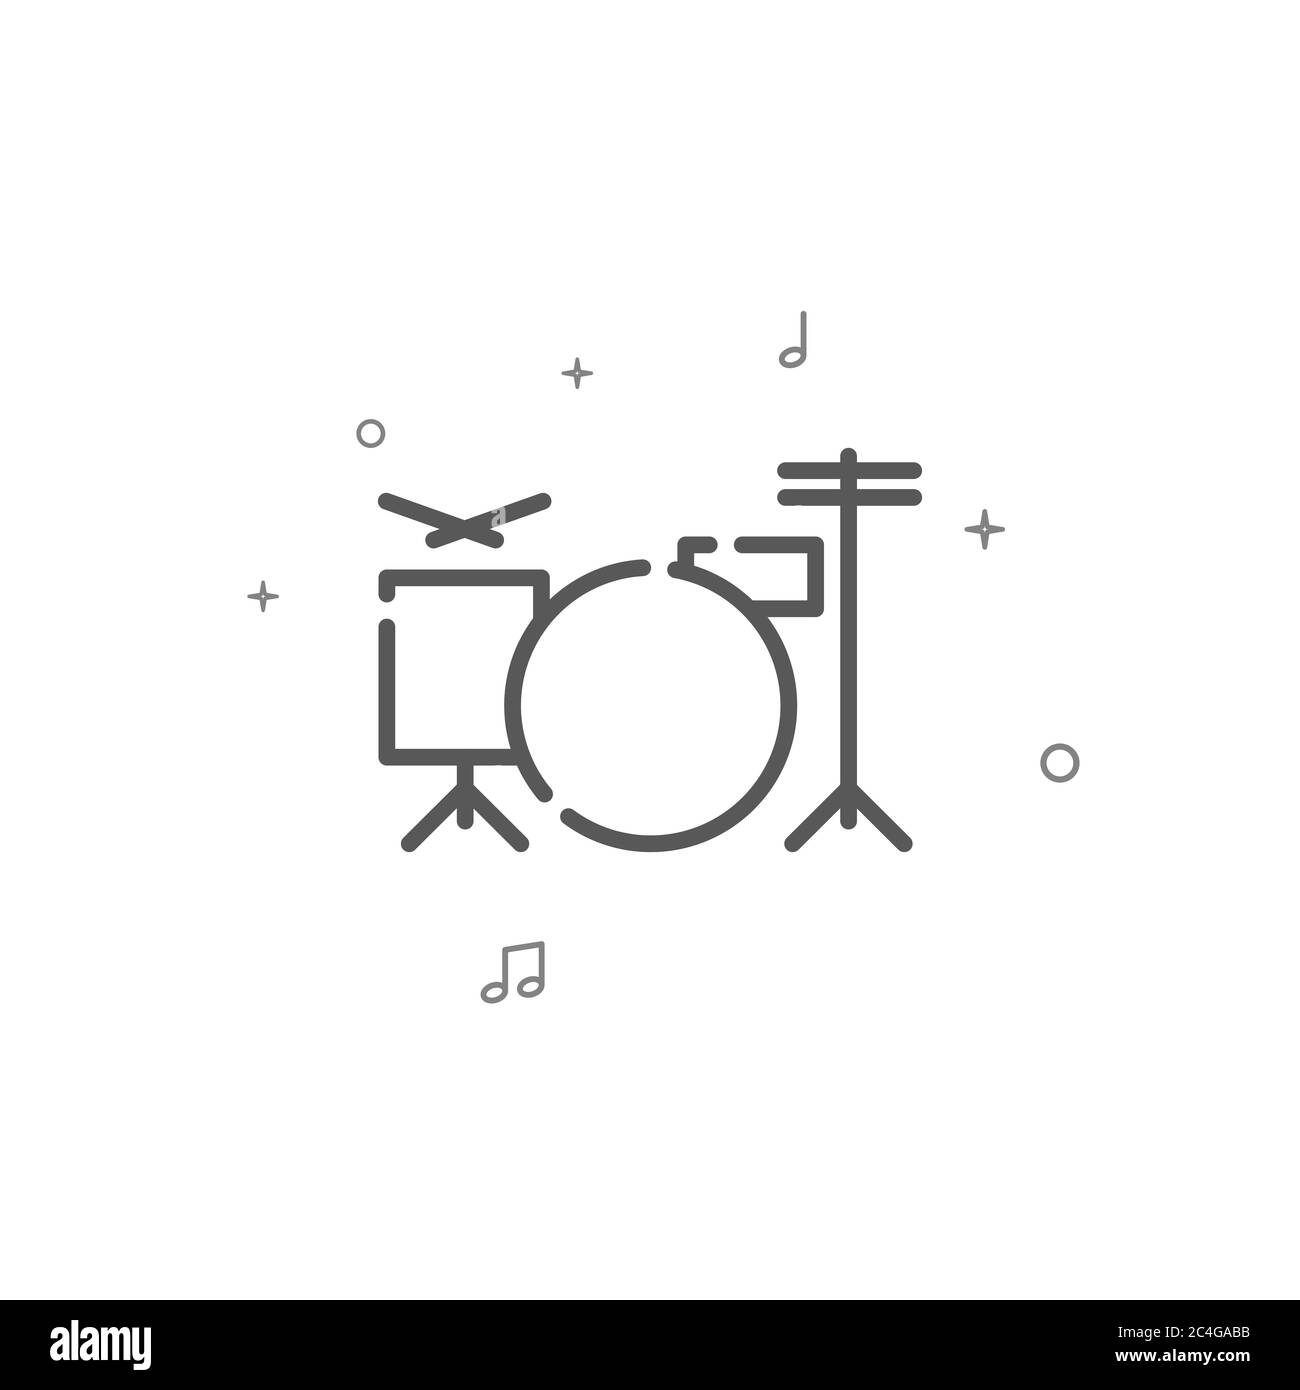 Drum kit simple line icon. Drummer symbol, pictogram, sign. Light background. Stock Photo